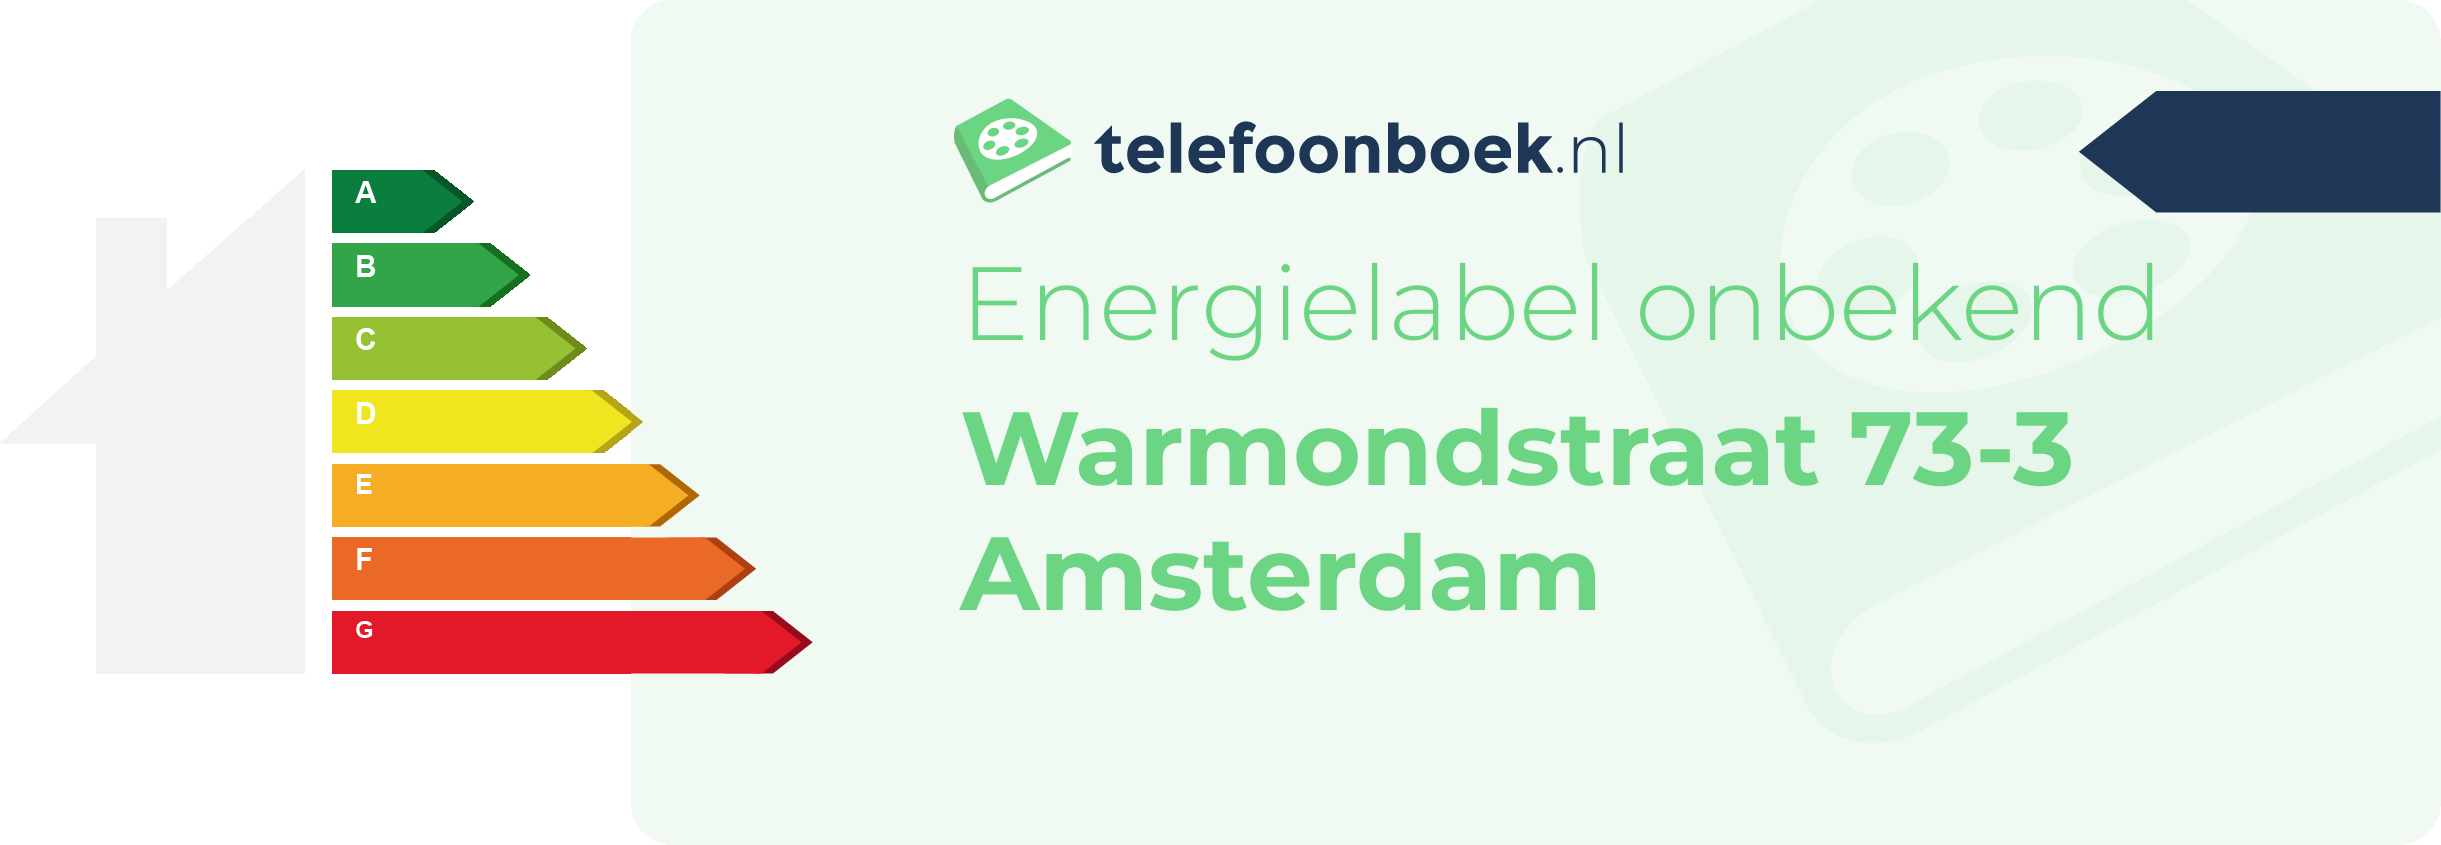 Energielabel Warmondstraat 73-3 Amsterdam